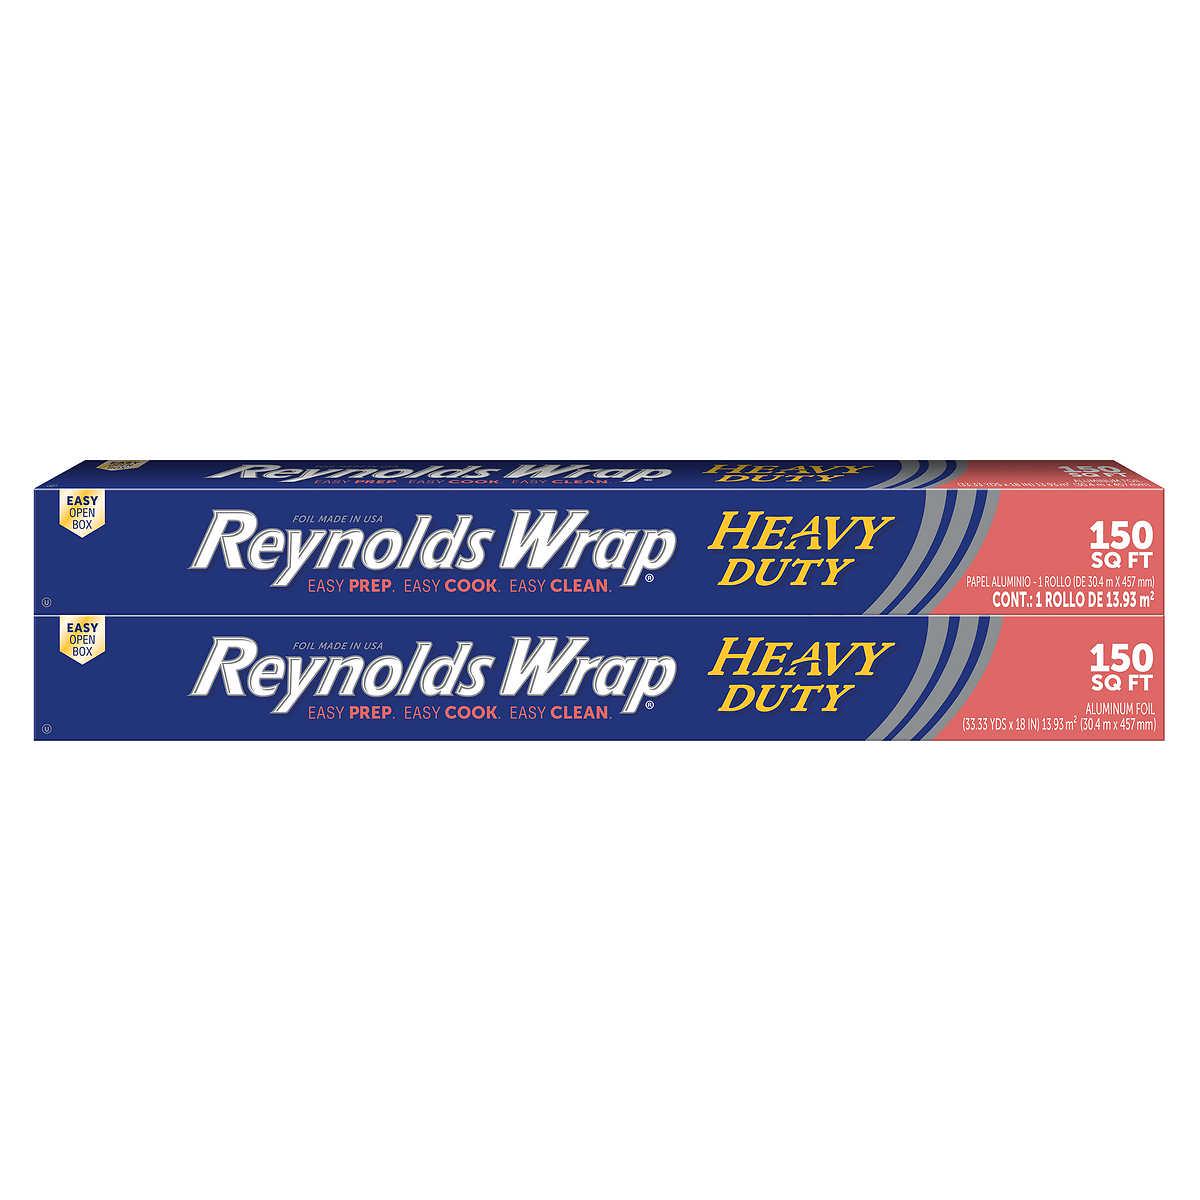 Reynolds Wrap Aluminum Foil, 500 sq ft